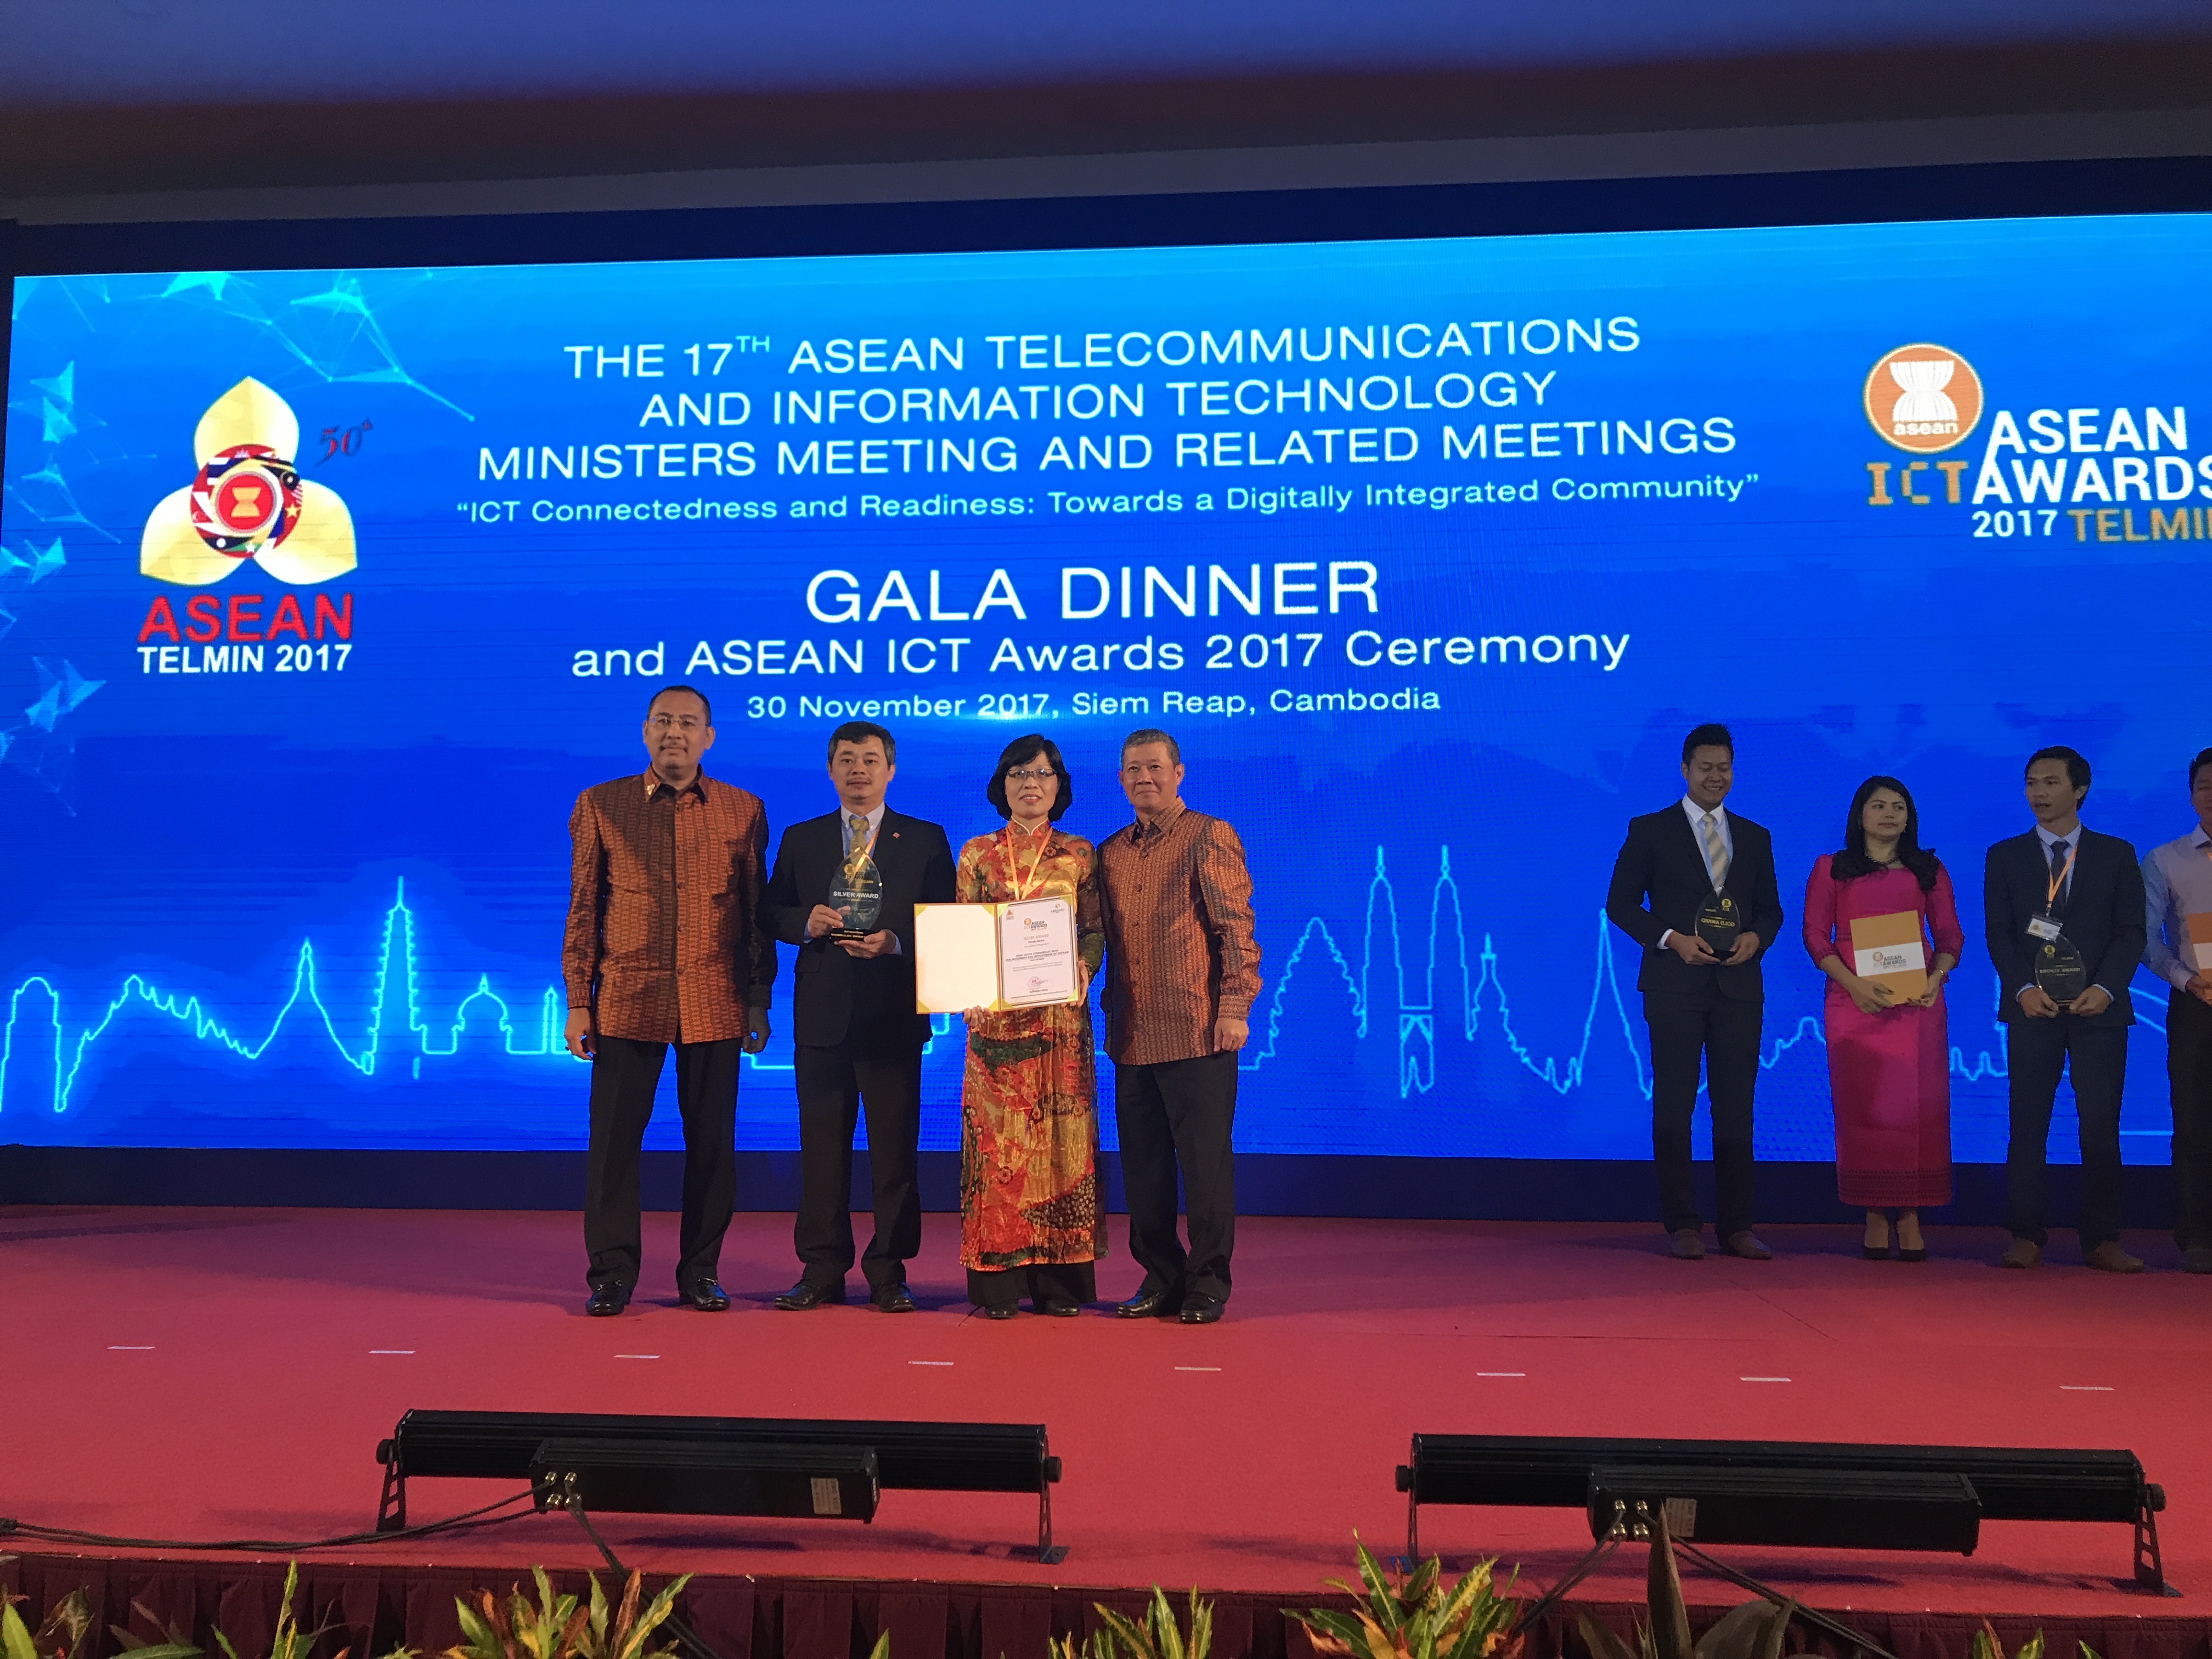 BIDV Payment đạt giải Bạc tại ASEAN ICT Awards 2017